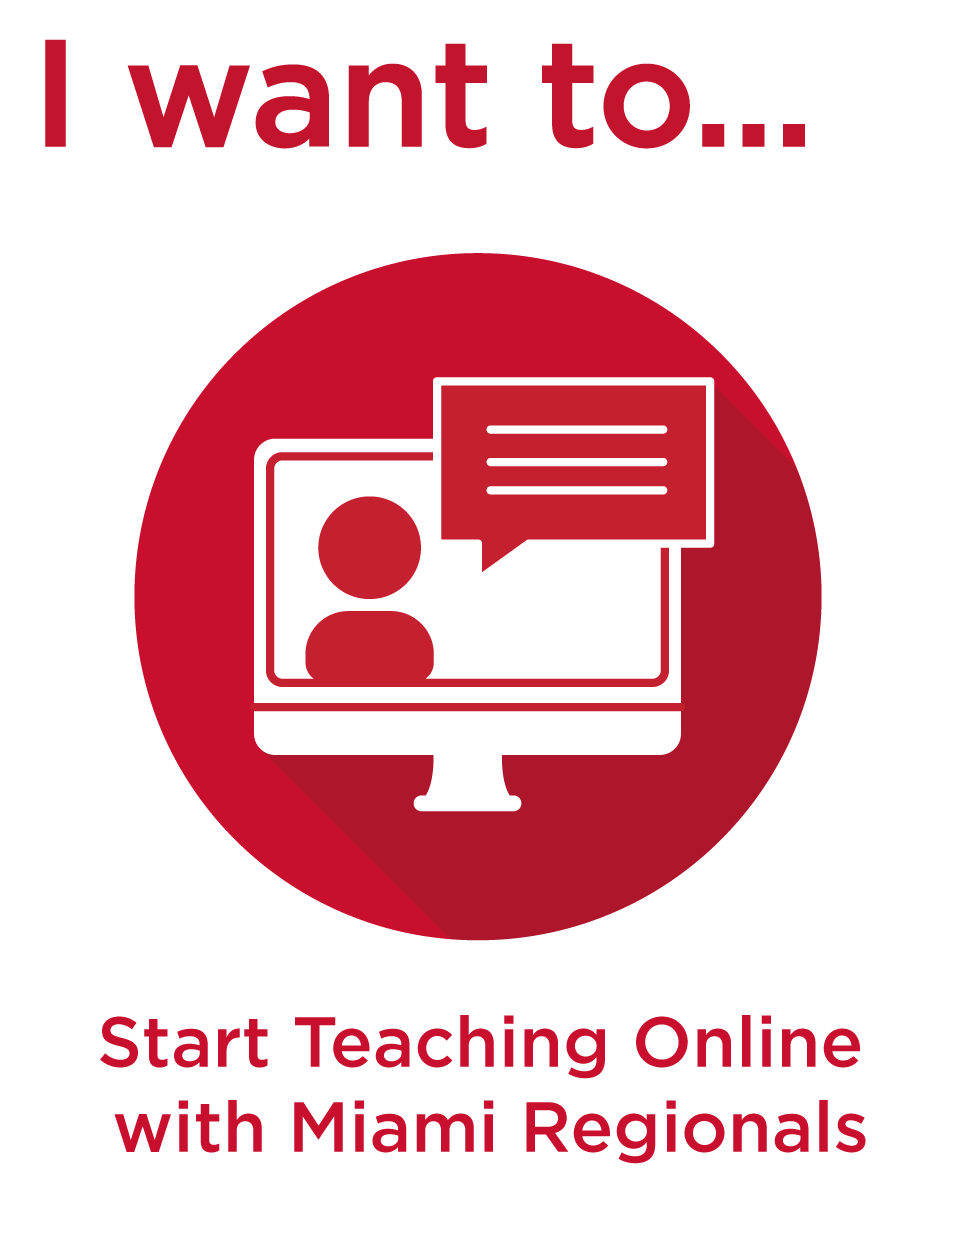 eccoe-website-icons-round-start-teaching-230x300.png